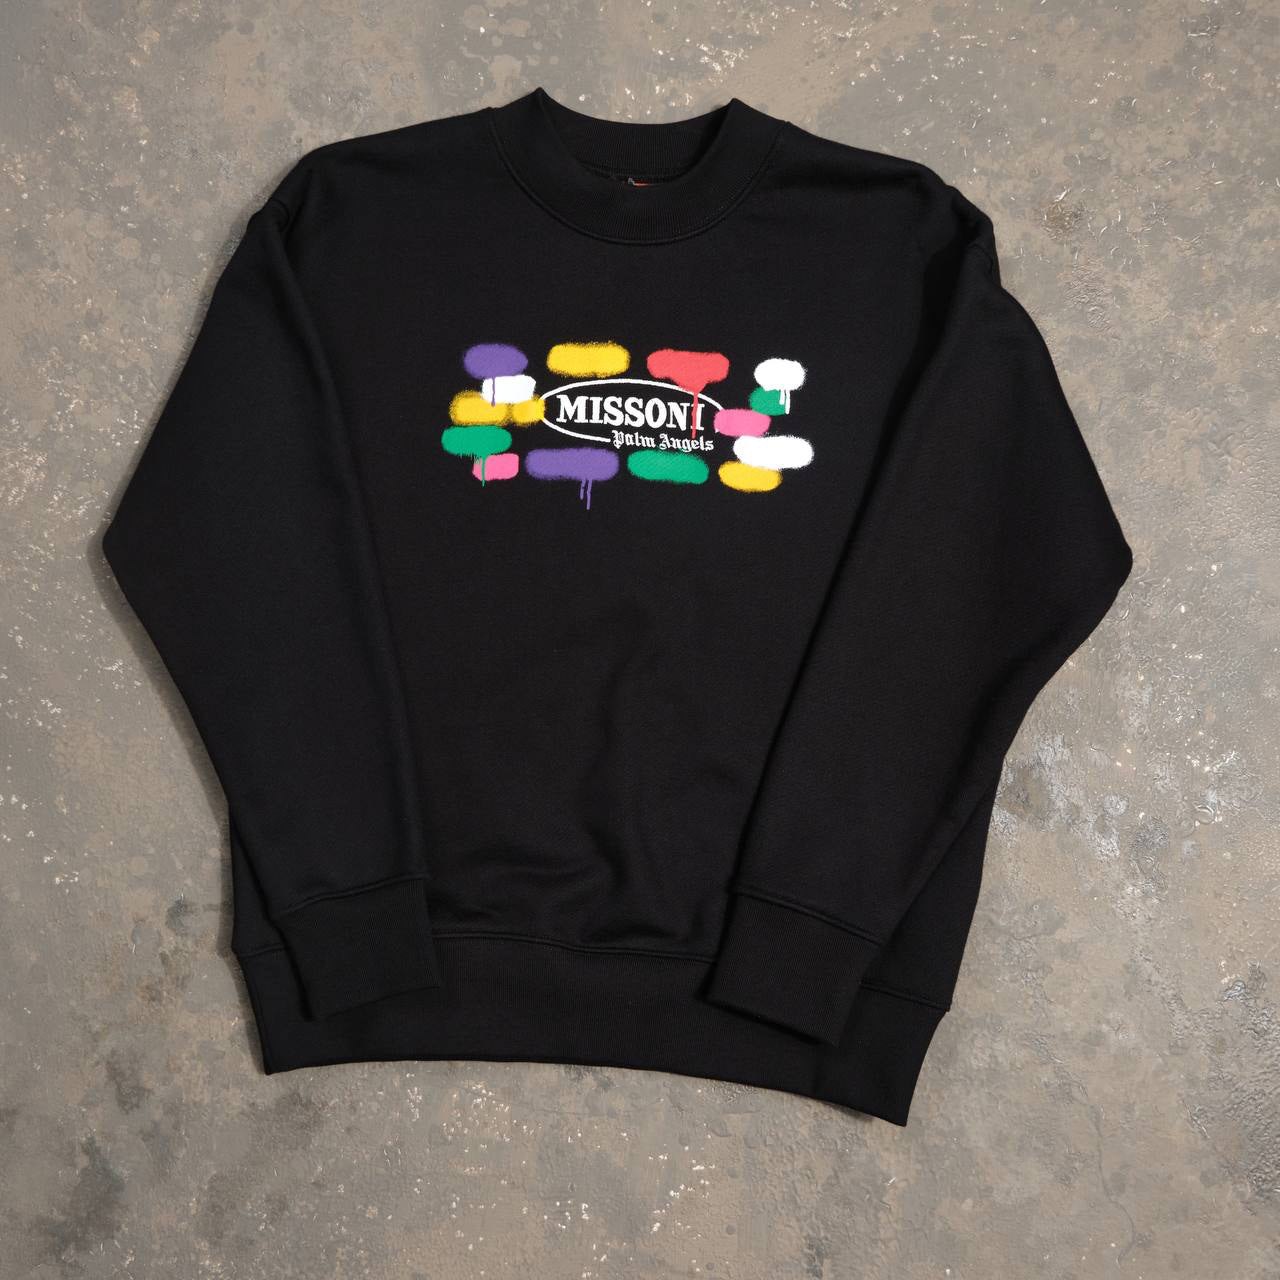 Palm Angels × Missoni Sport logo print Sweatshirt Black